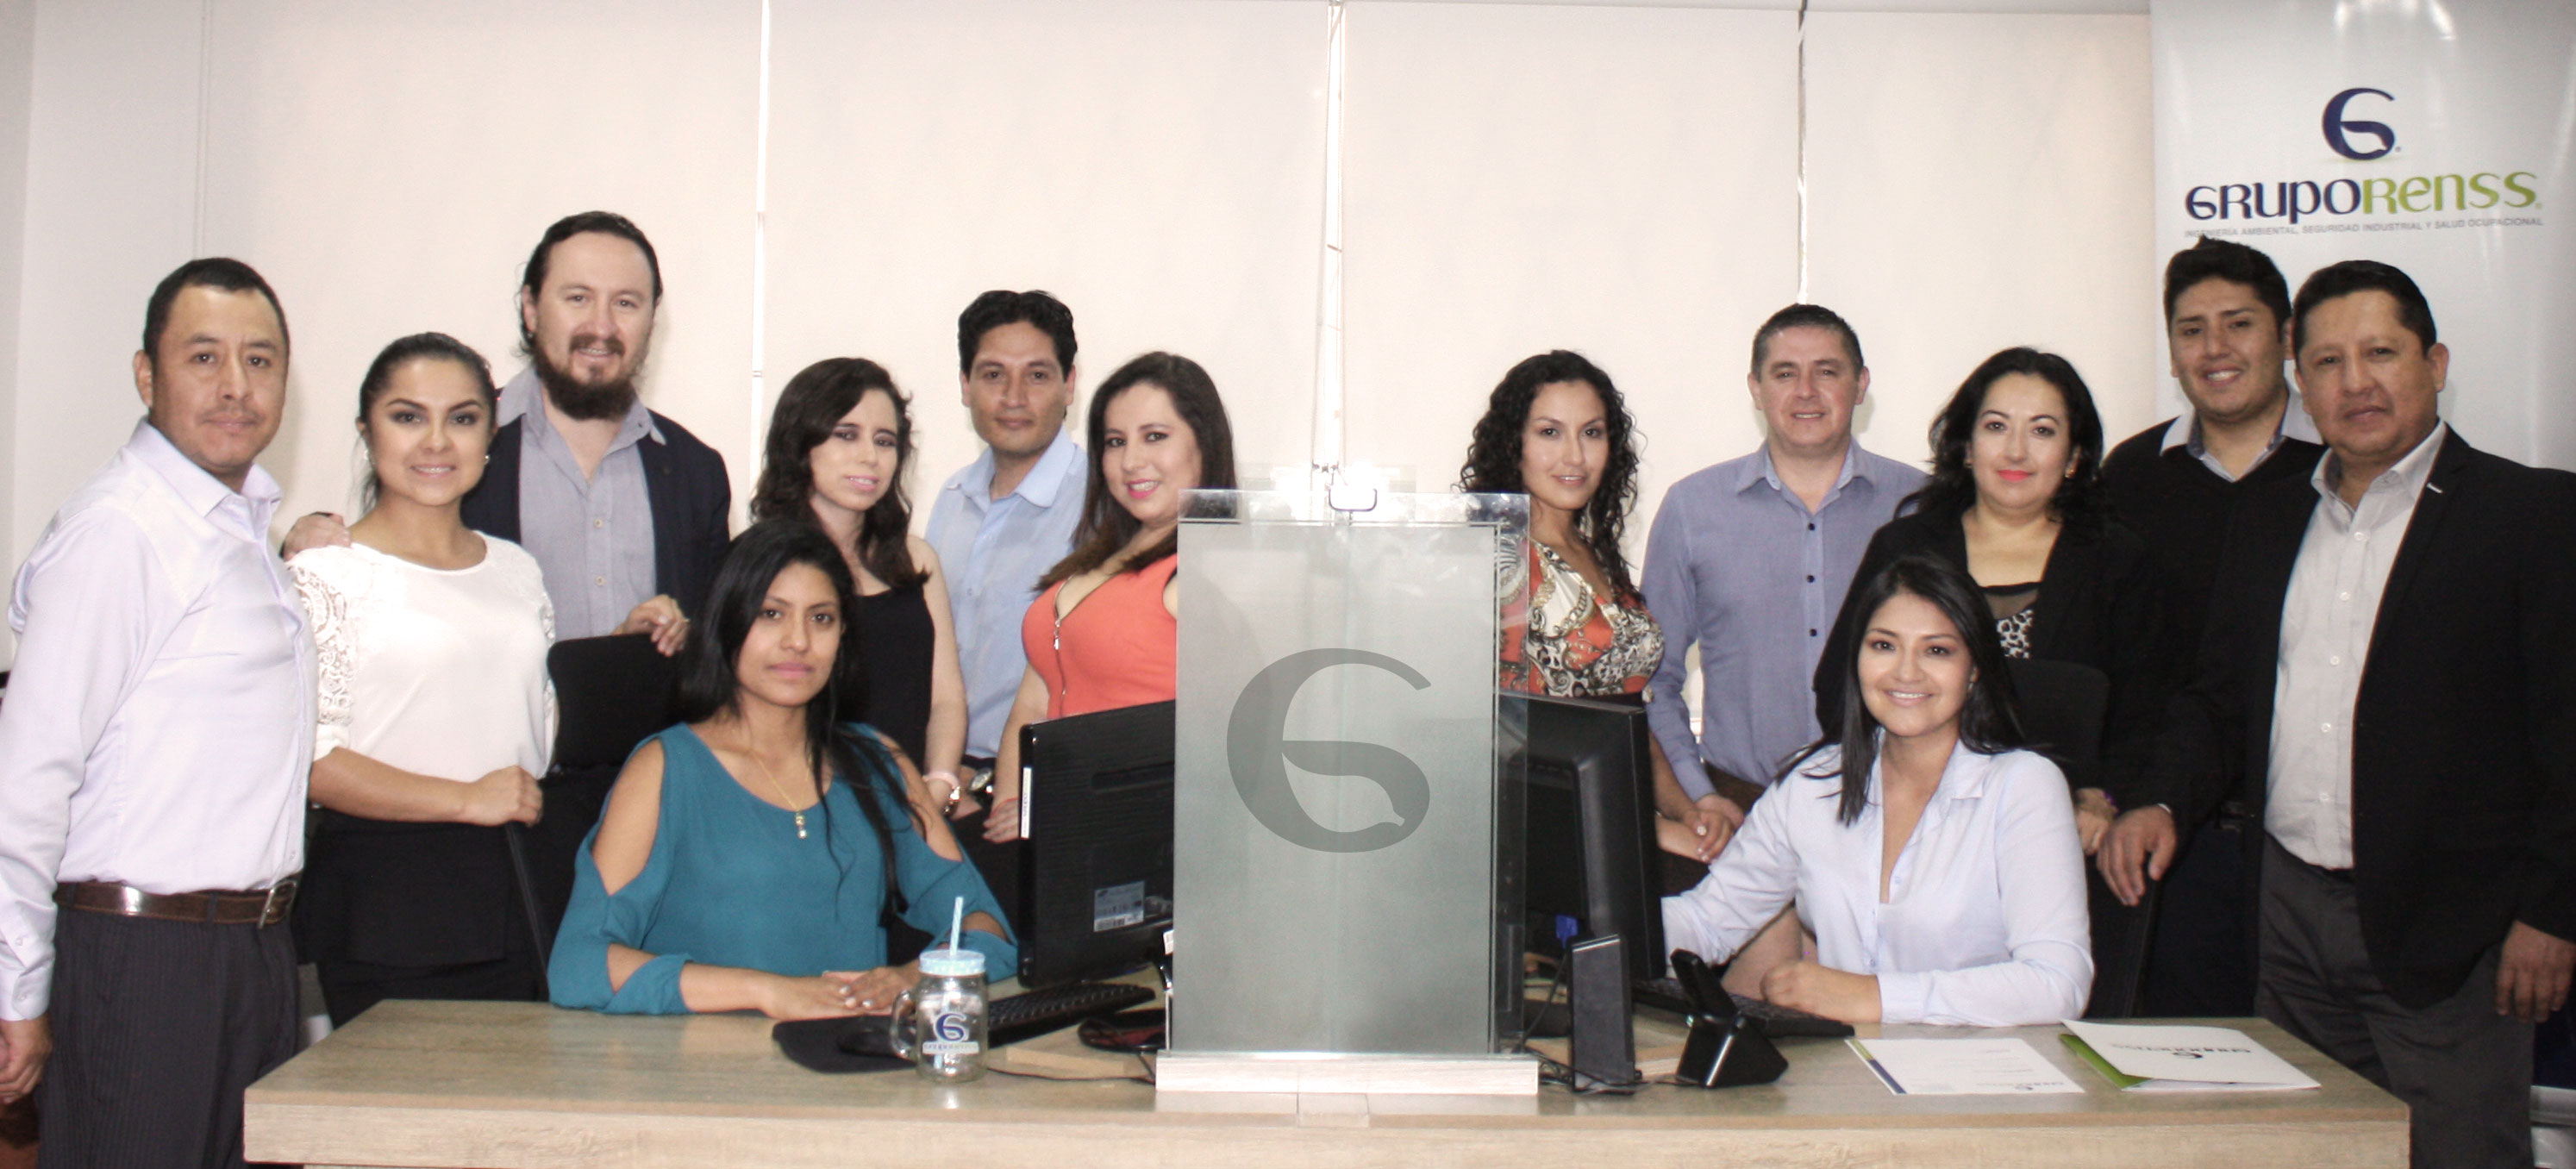 Gruporenss Equipo Tecnico Ecuador